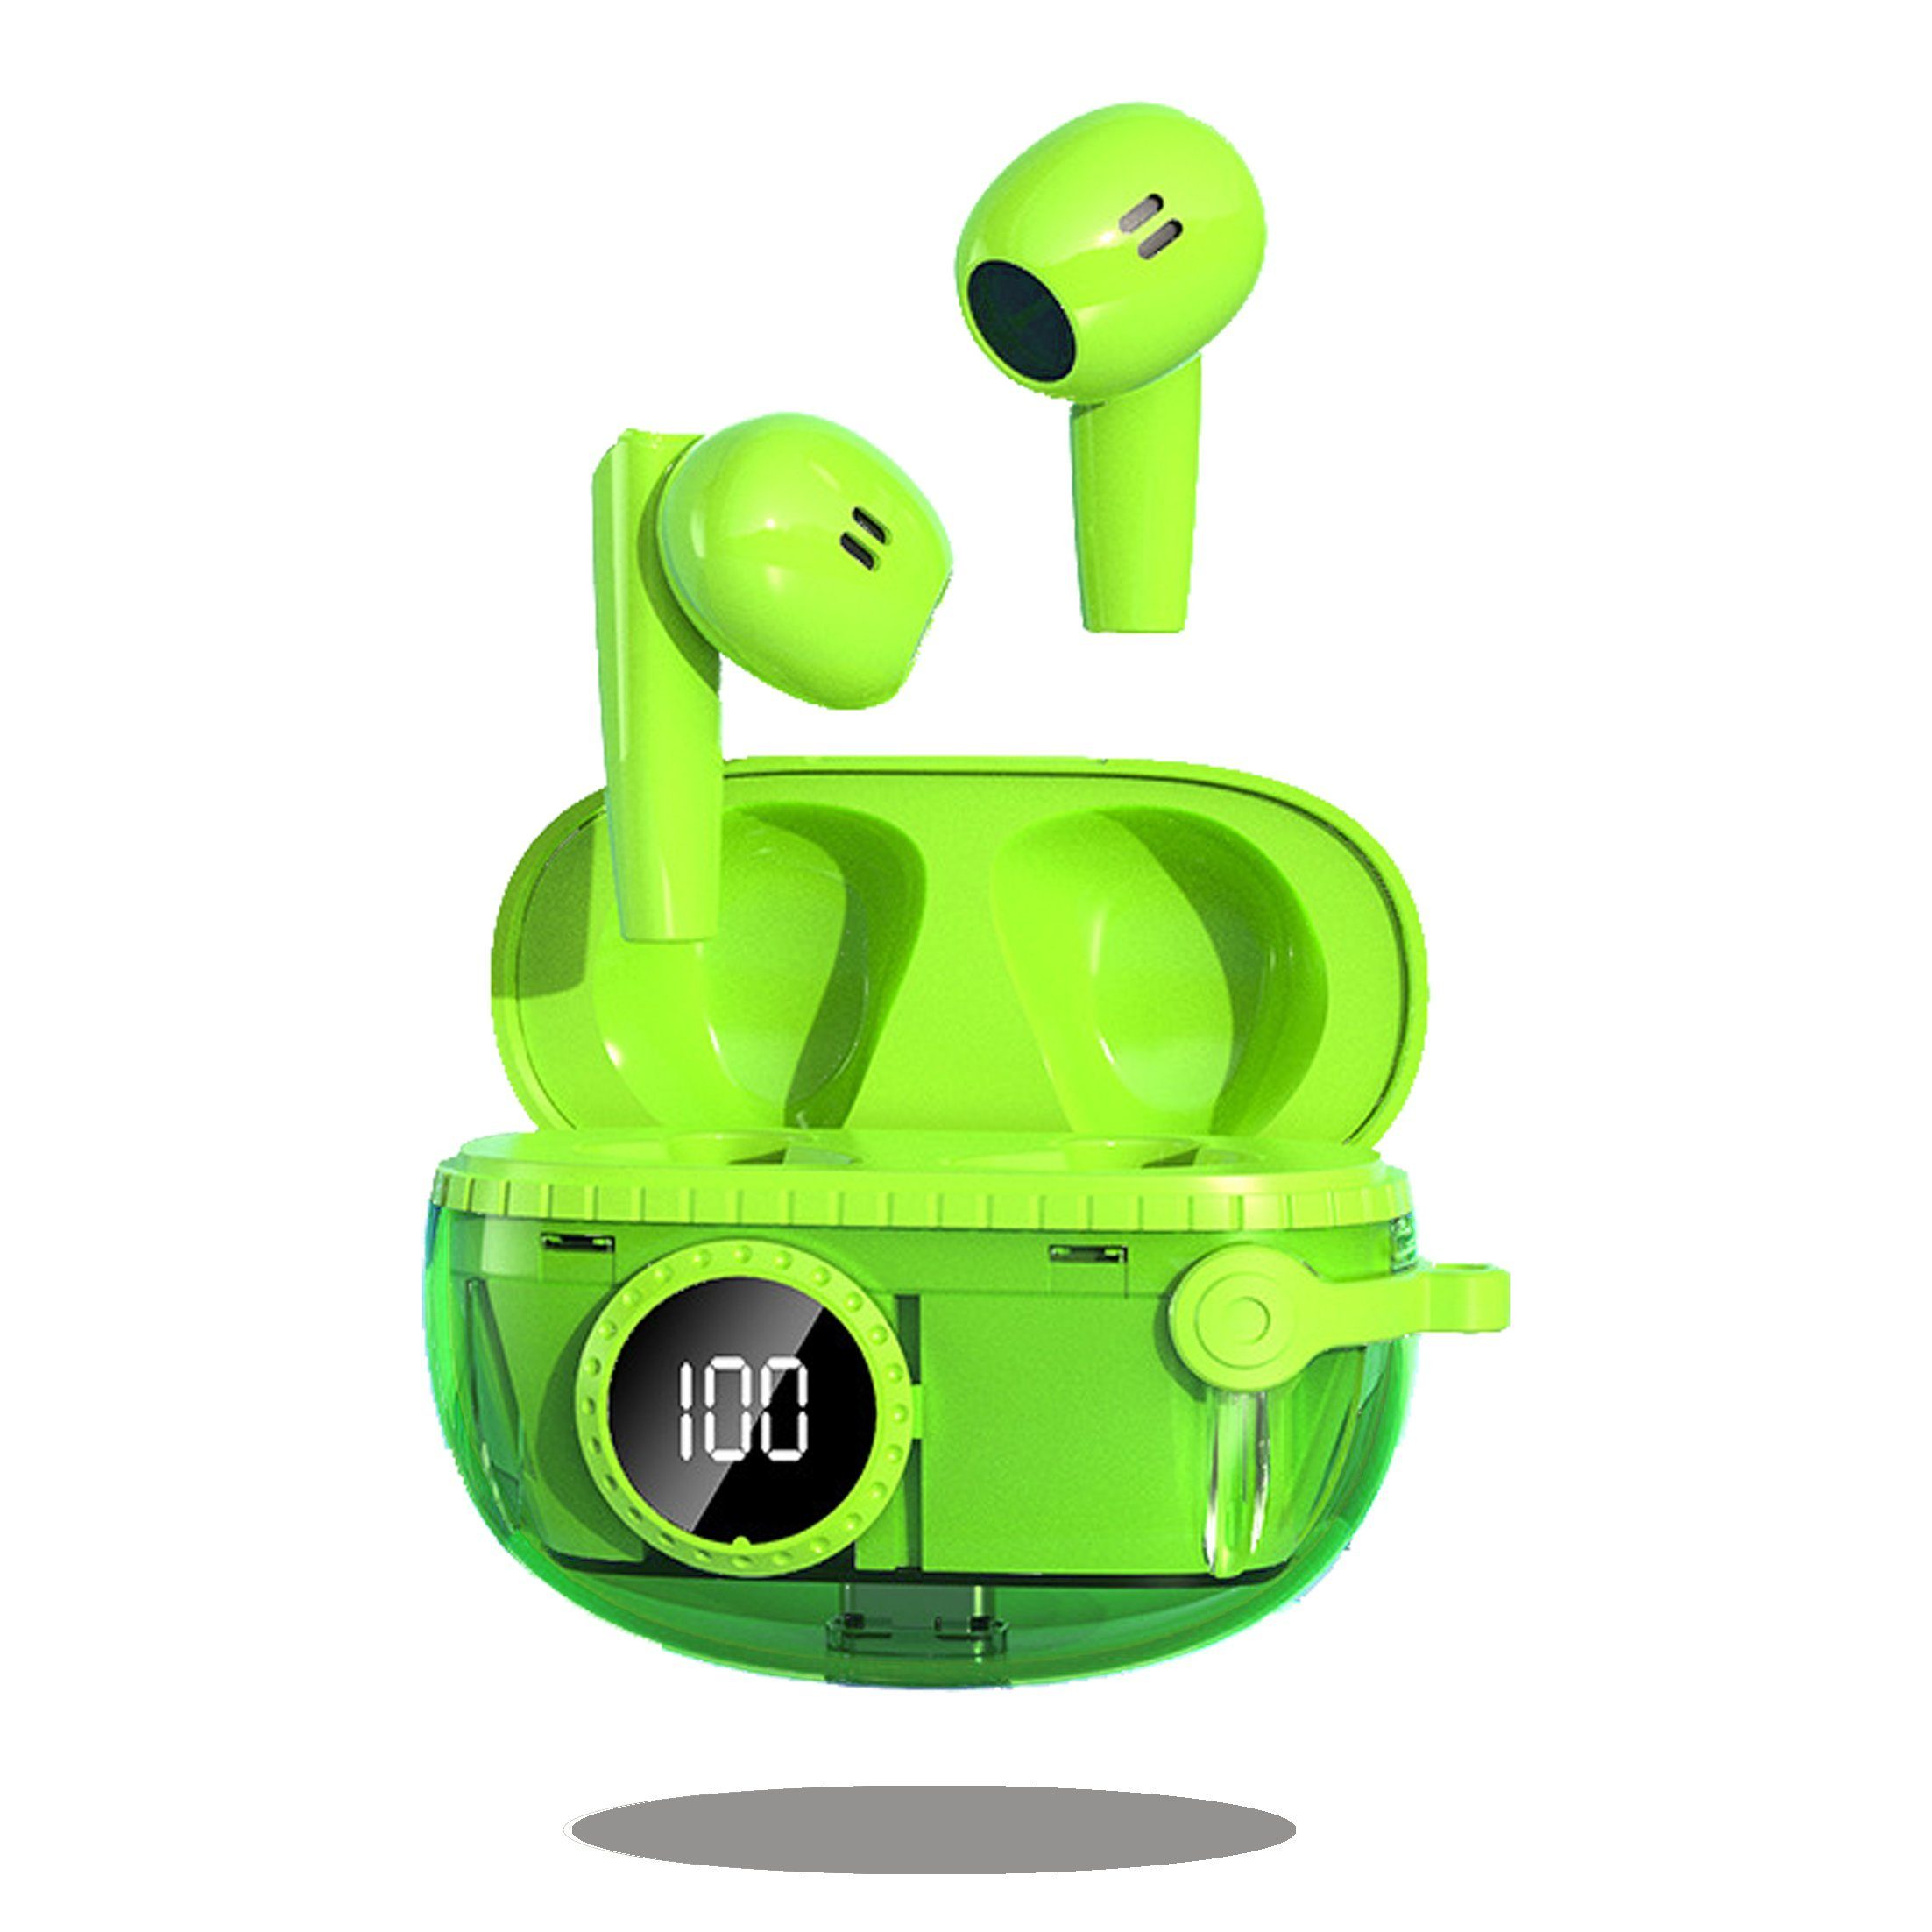 Diida Kopfhörer,In-Ear-Bluetooth-Kopfhörer mit Geräuschunterdrückung,Smart Funk-Kopfhörer grün